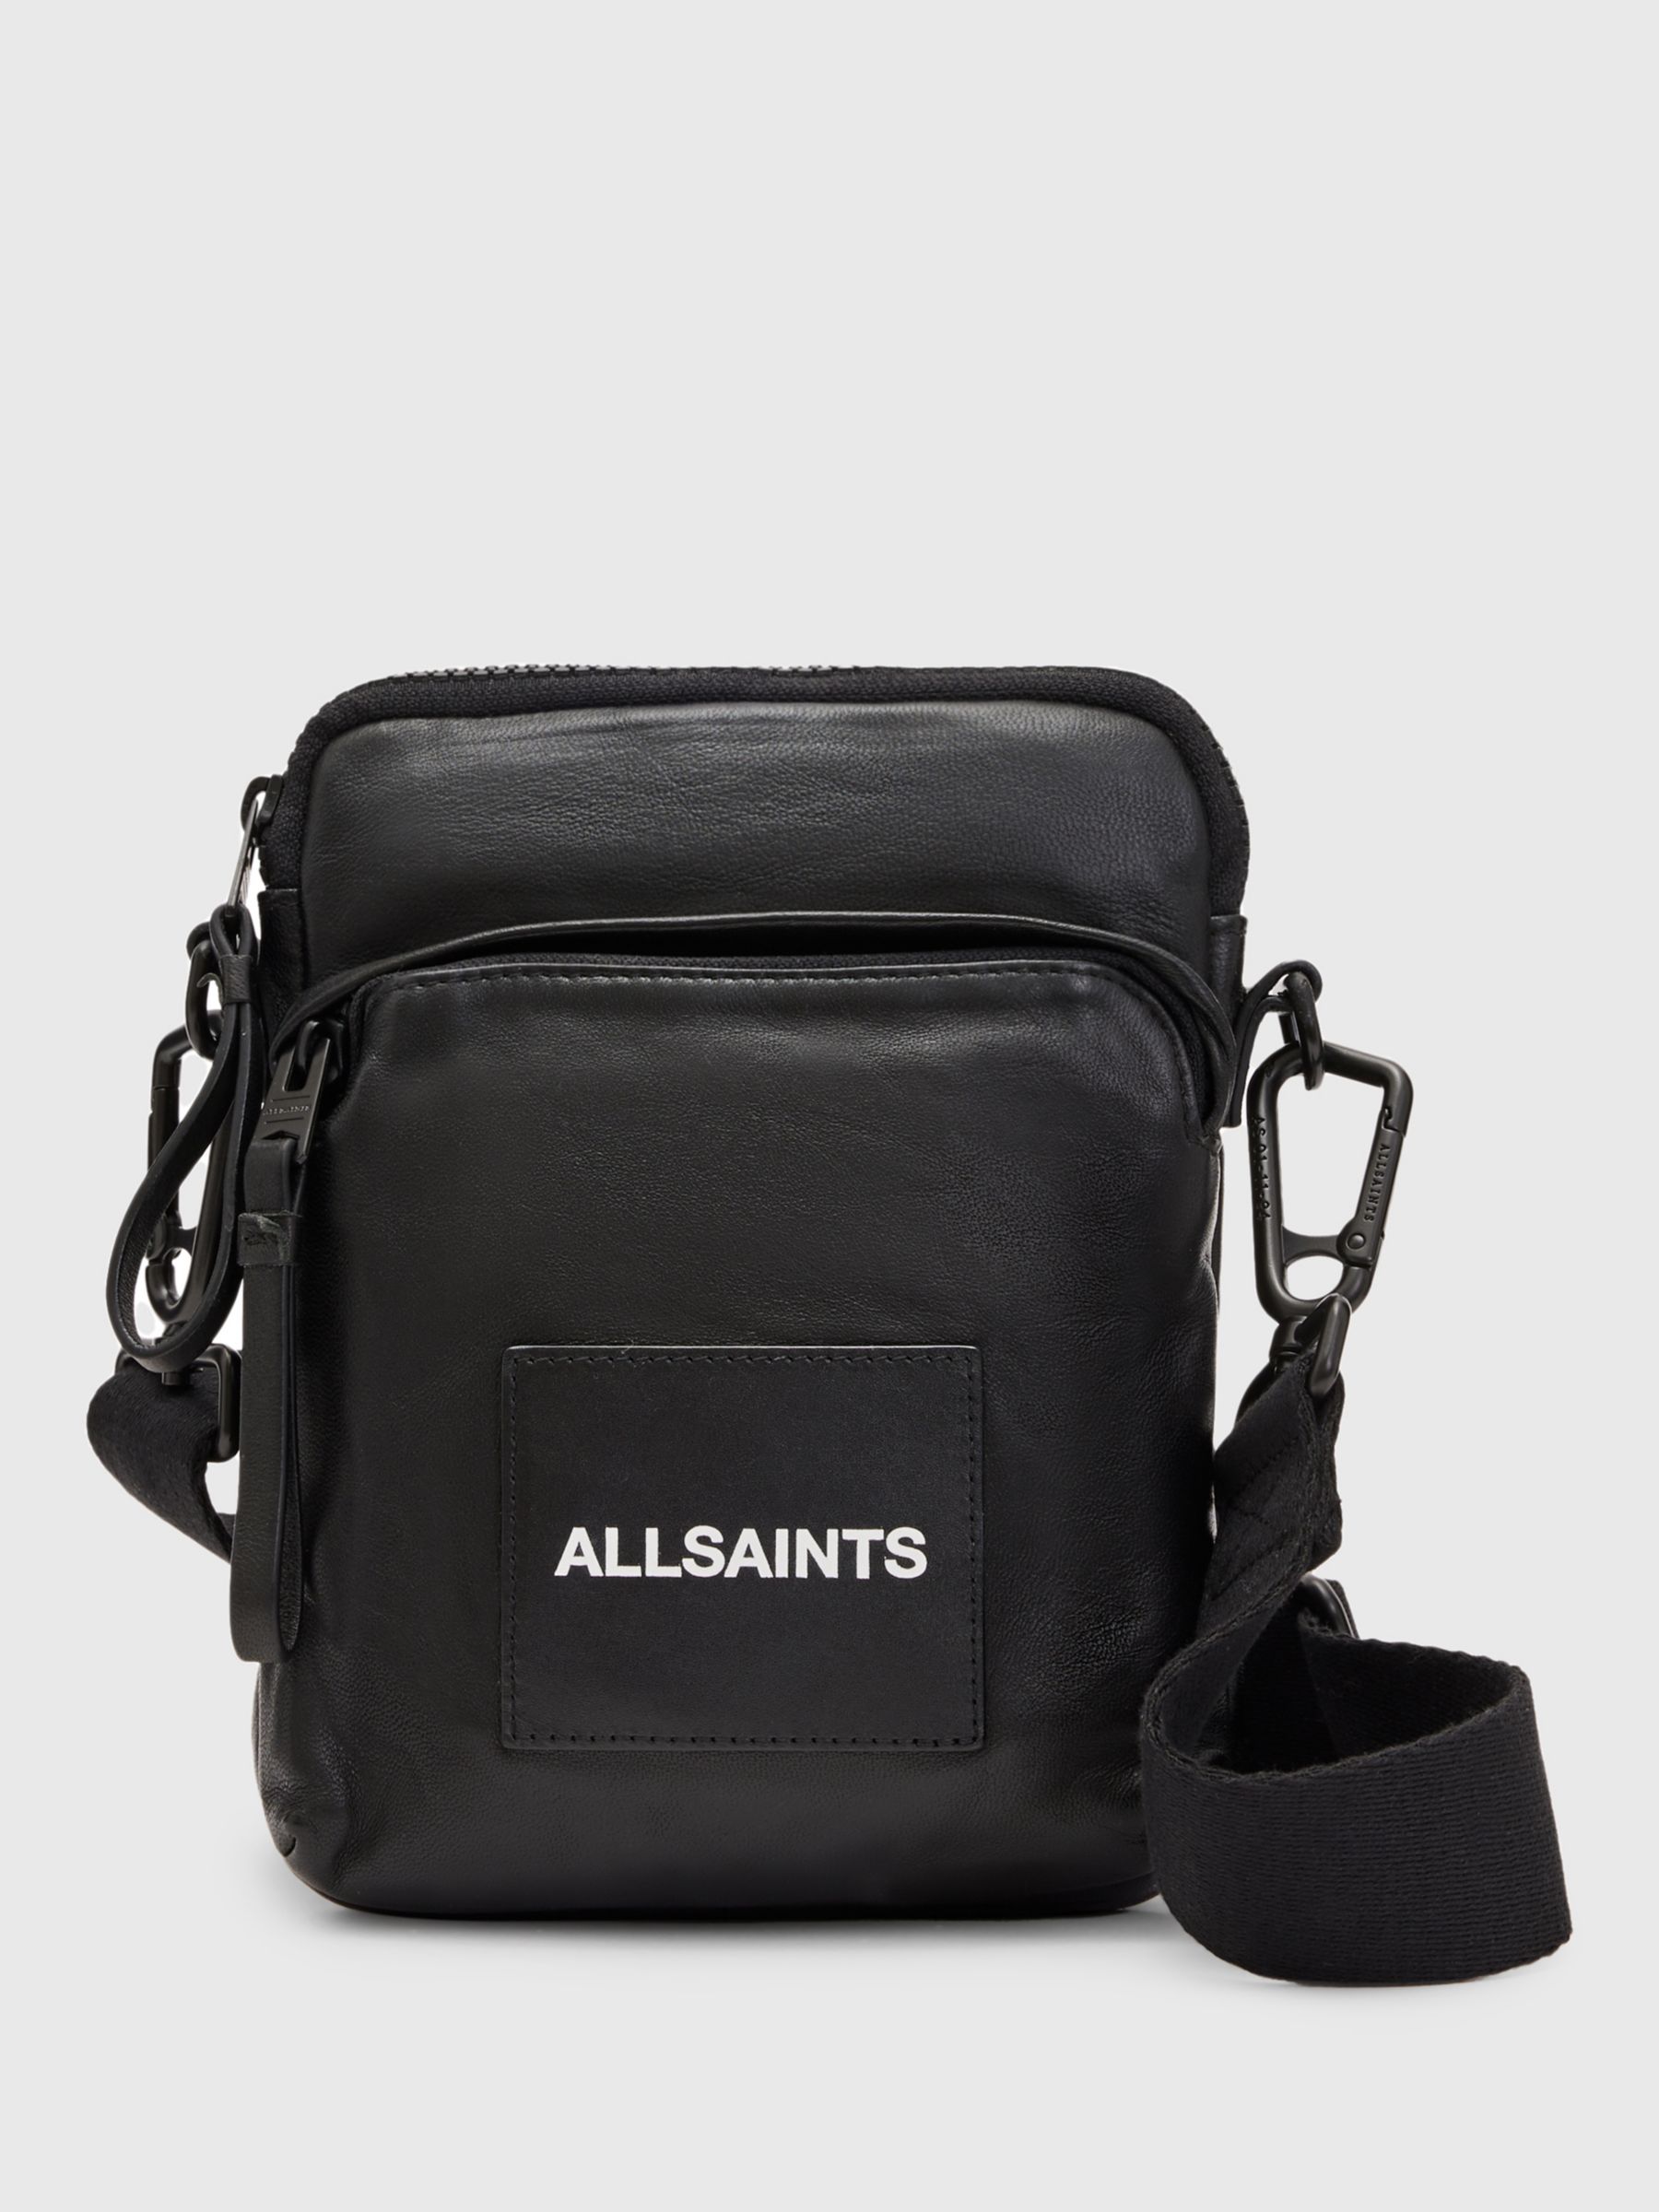 AllSaints Falcon Cross Body Pouch Bag, Black at John Lewis & Partners